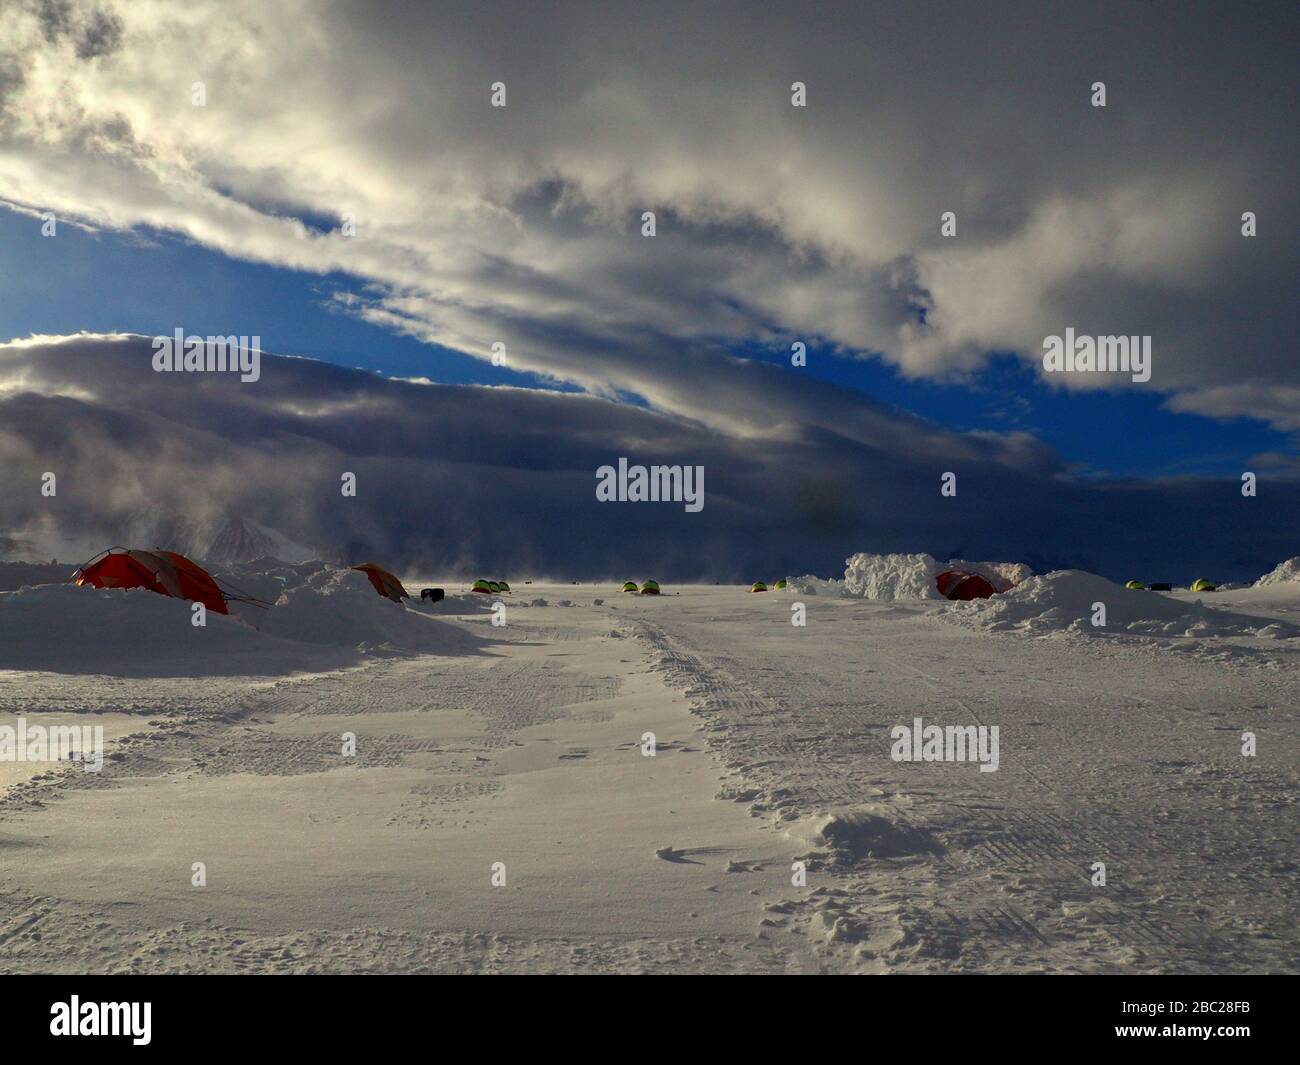 Antarctica - Union Glacier, Vinson base camp, the South Pole, planes Stock Photo